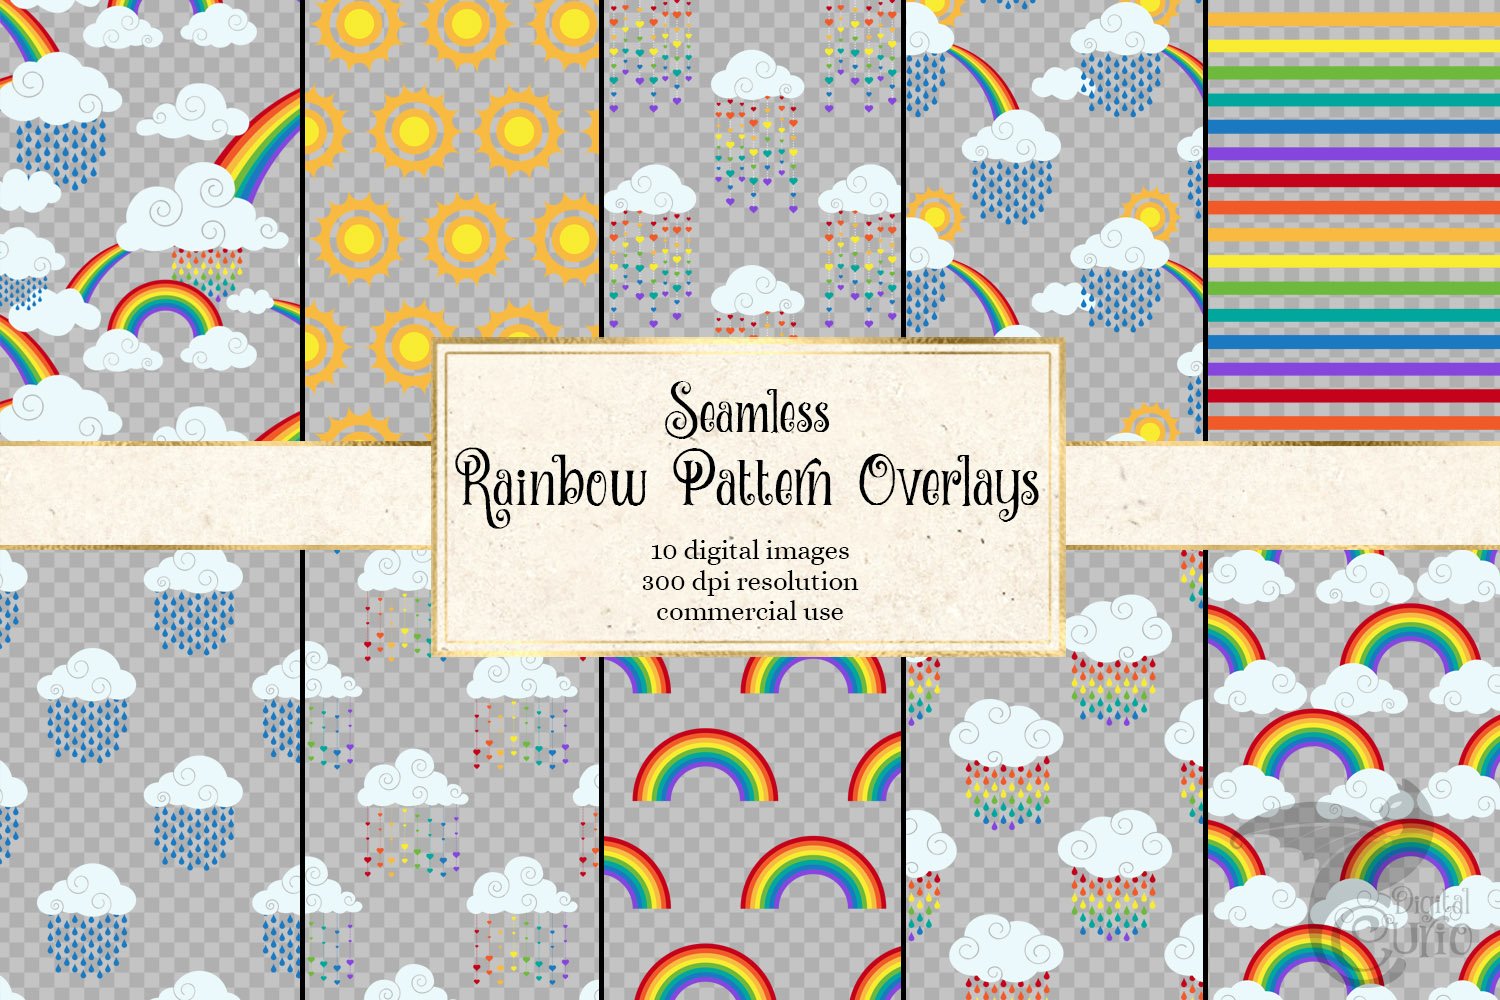 Rainbow Pattern Overlays cover image.